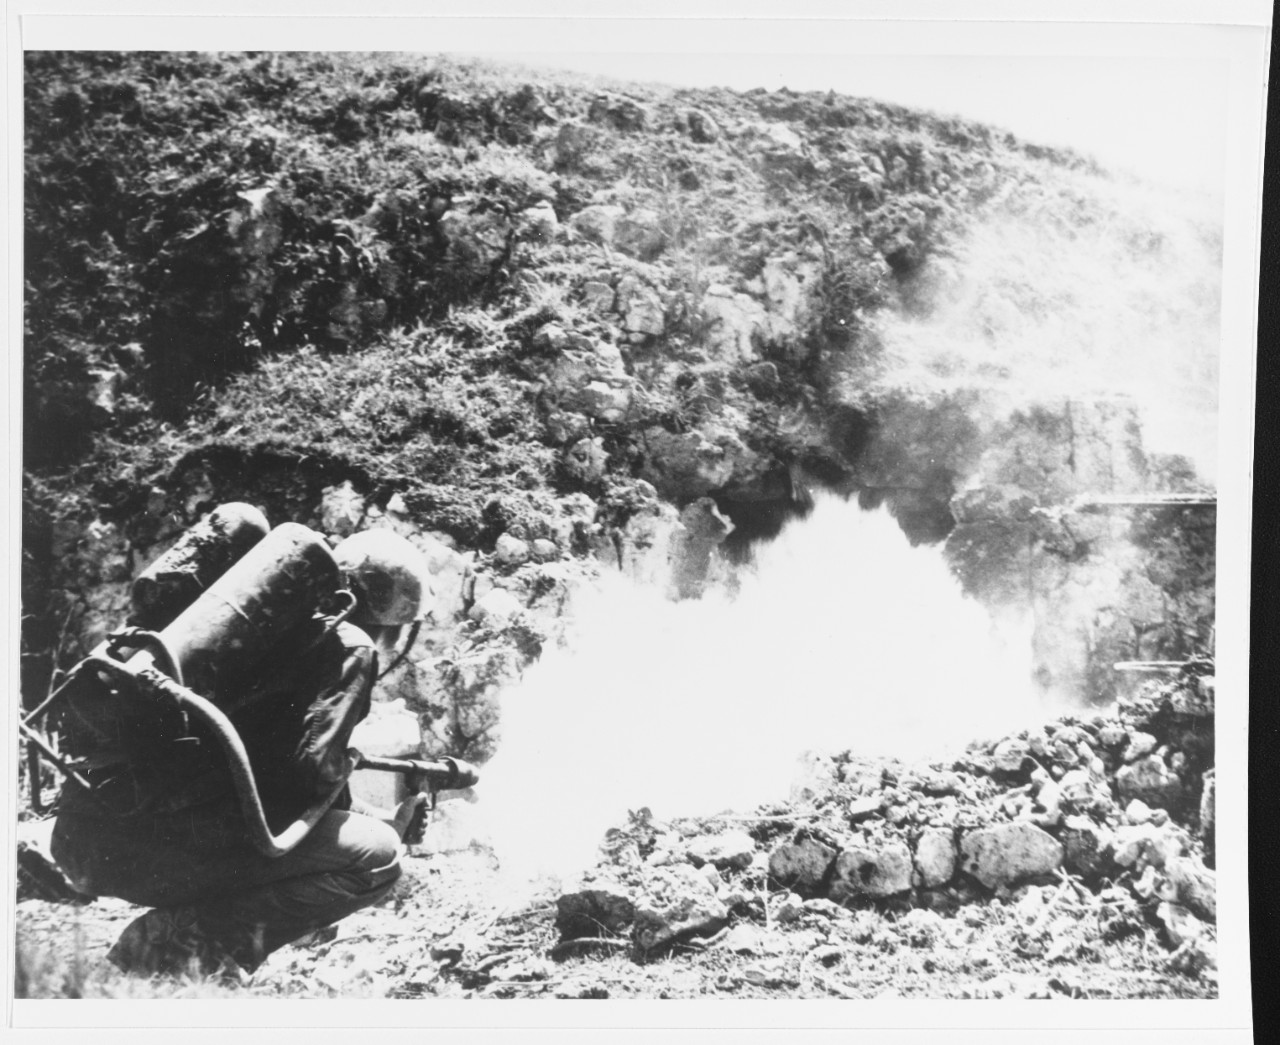 Okinawa Campaign, 1945.